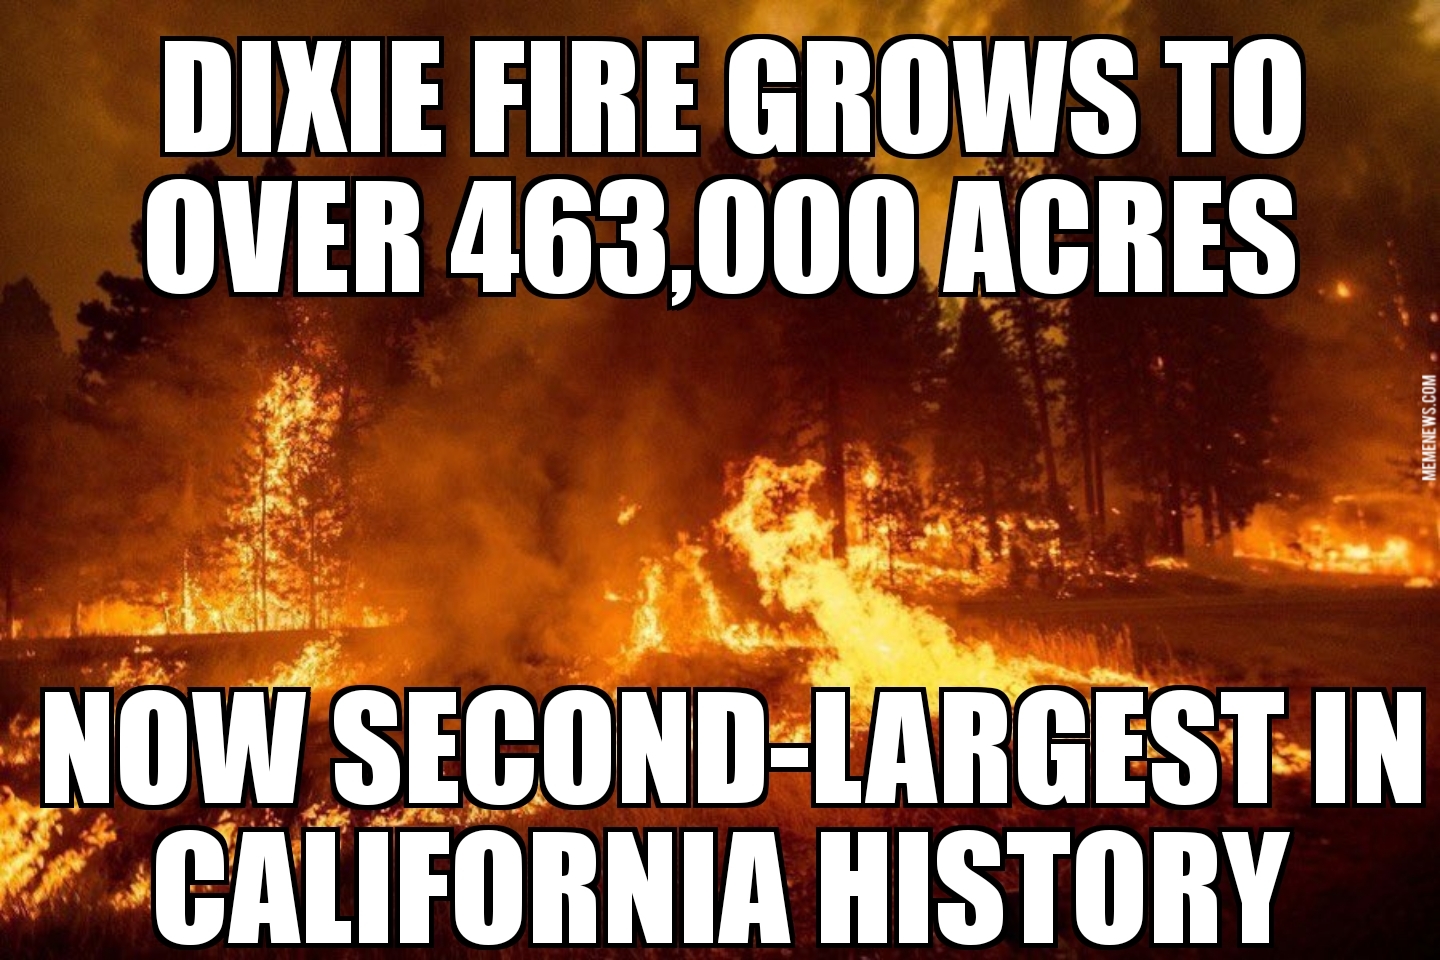 Dixie Fire now over 463k acres